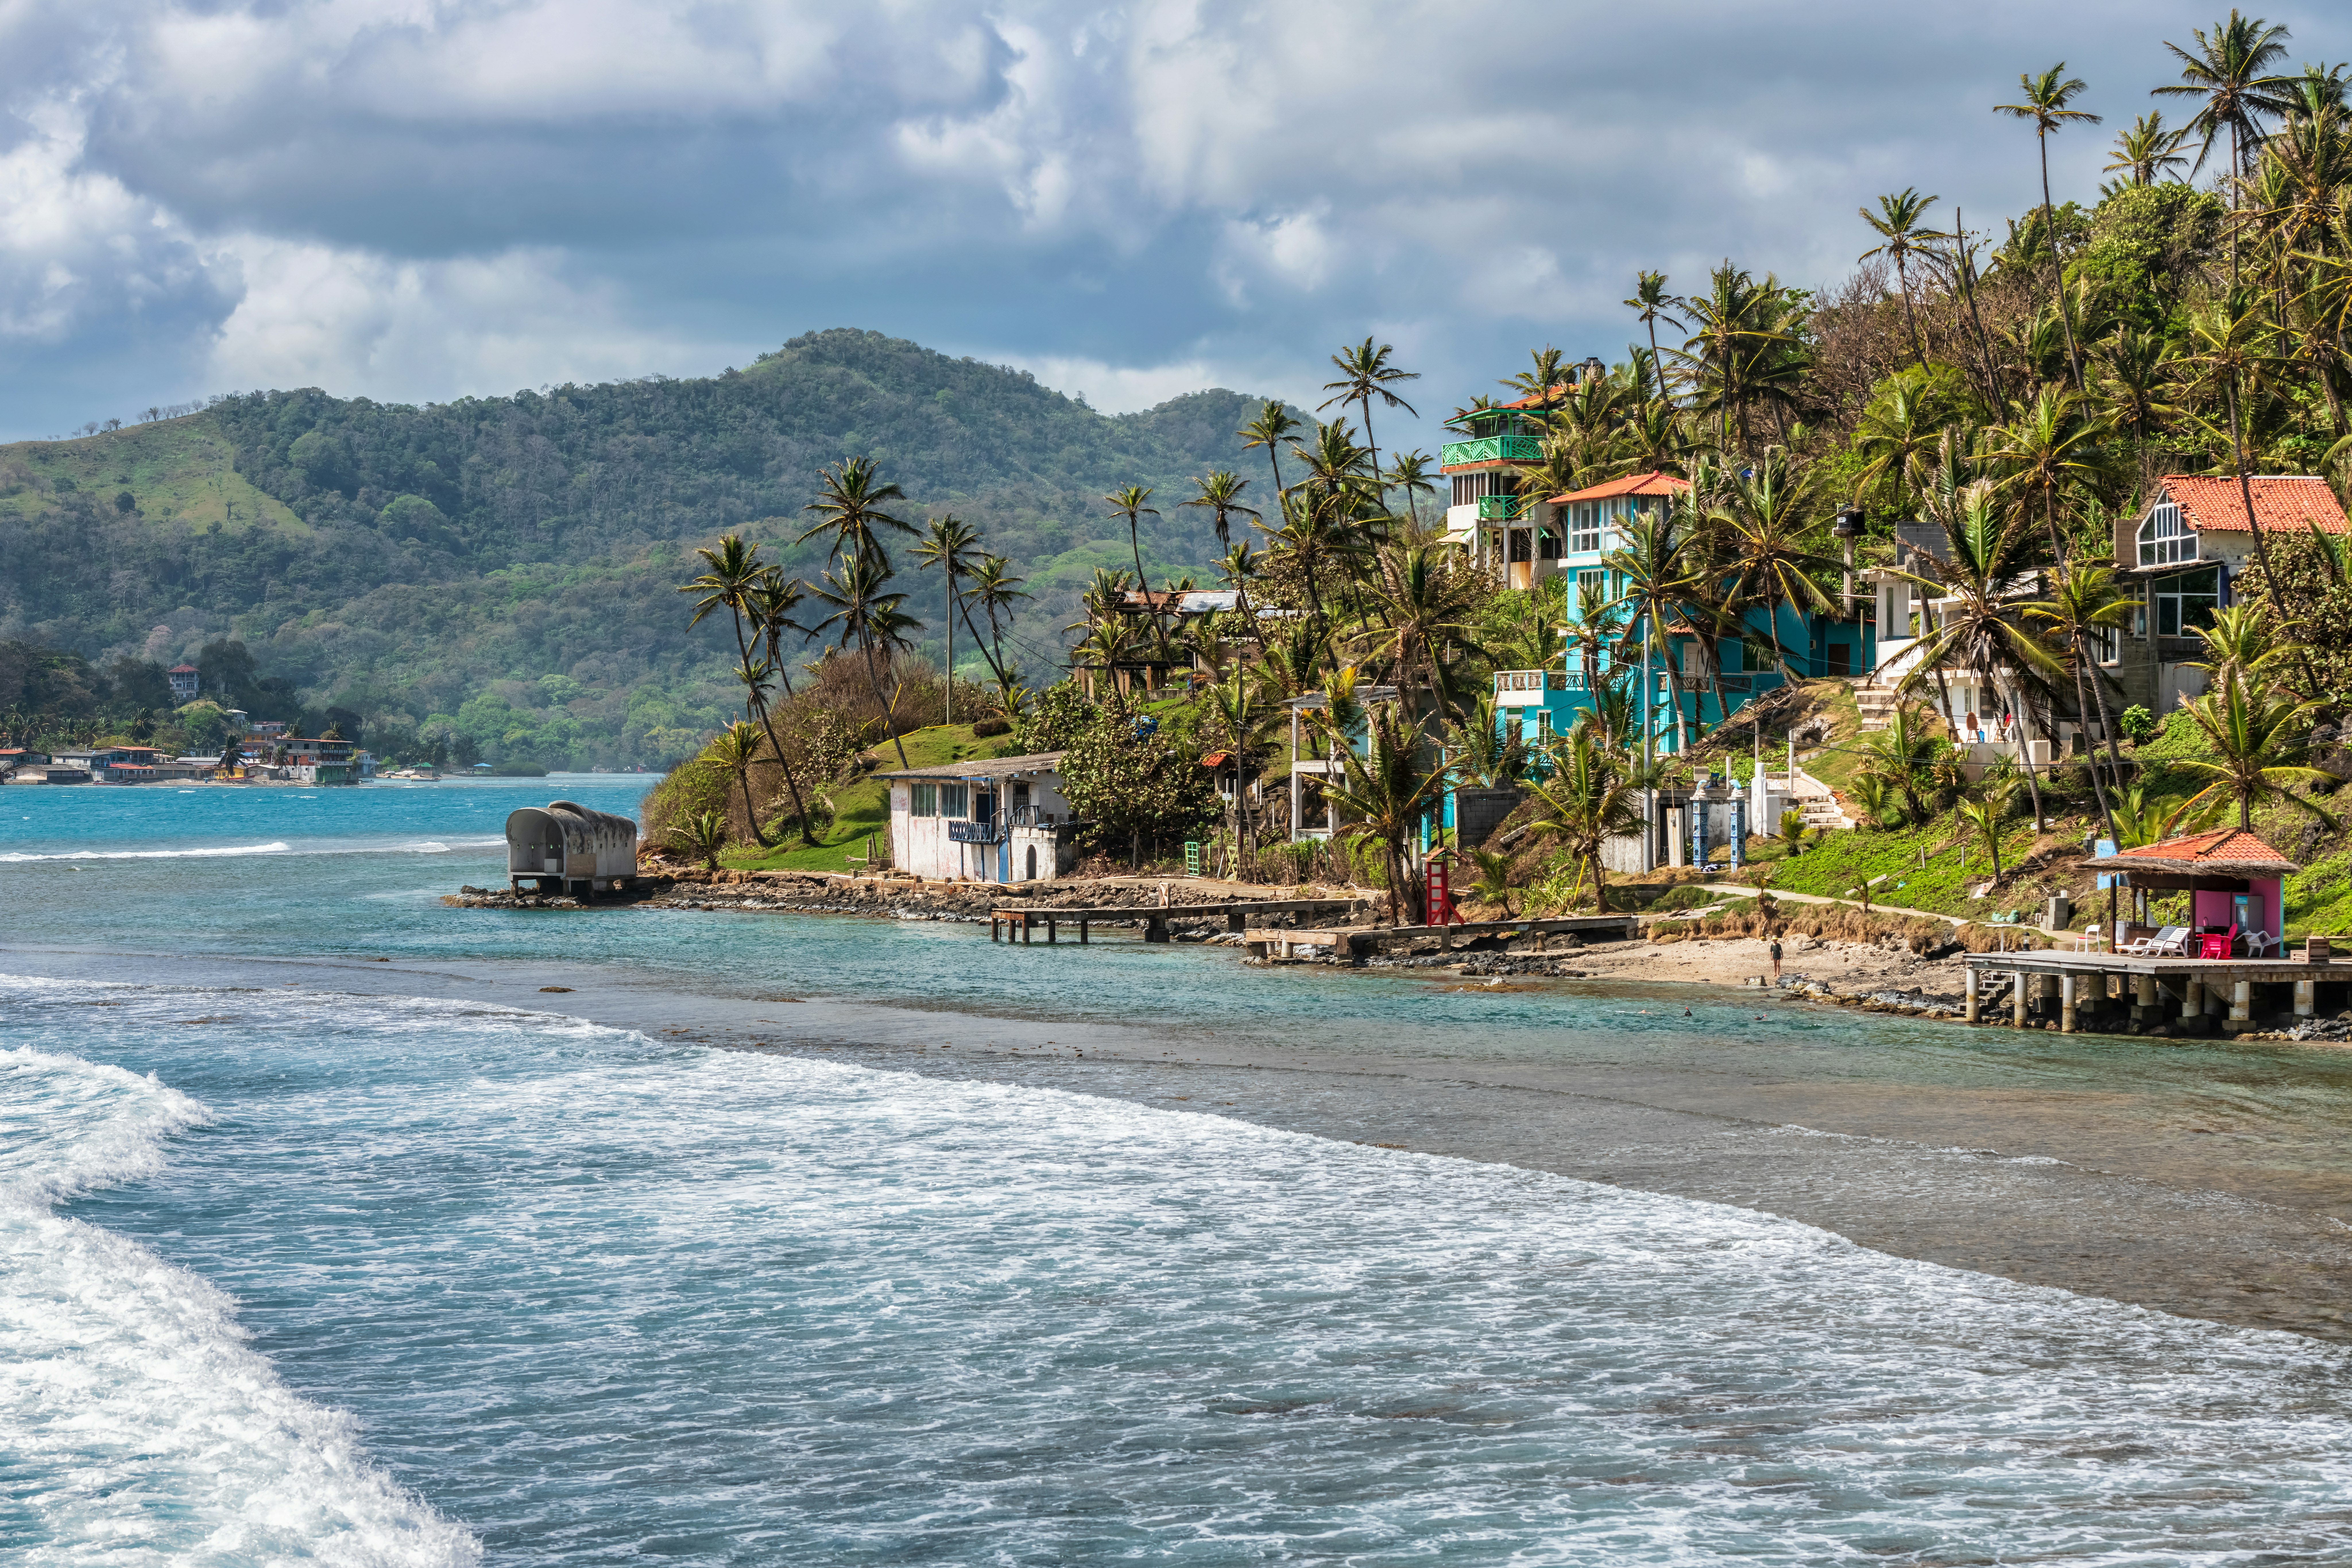 Palm trees, sea and houses on the shore of Isla Grande, Panama